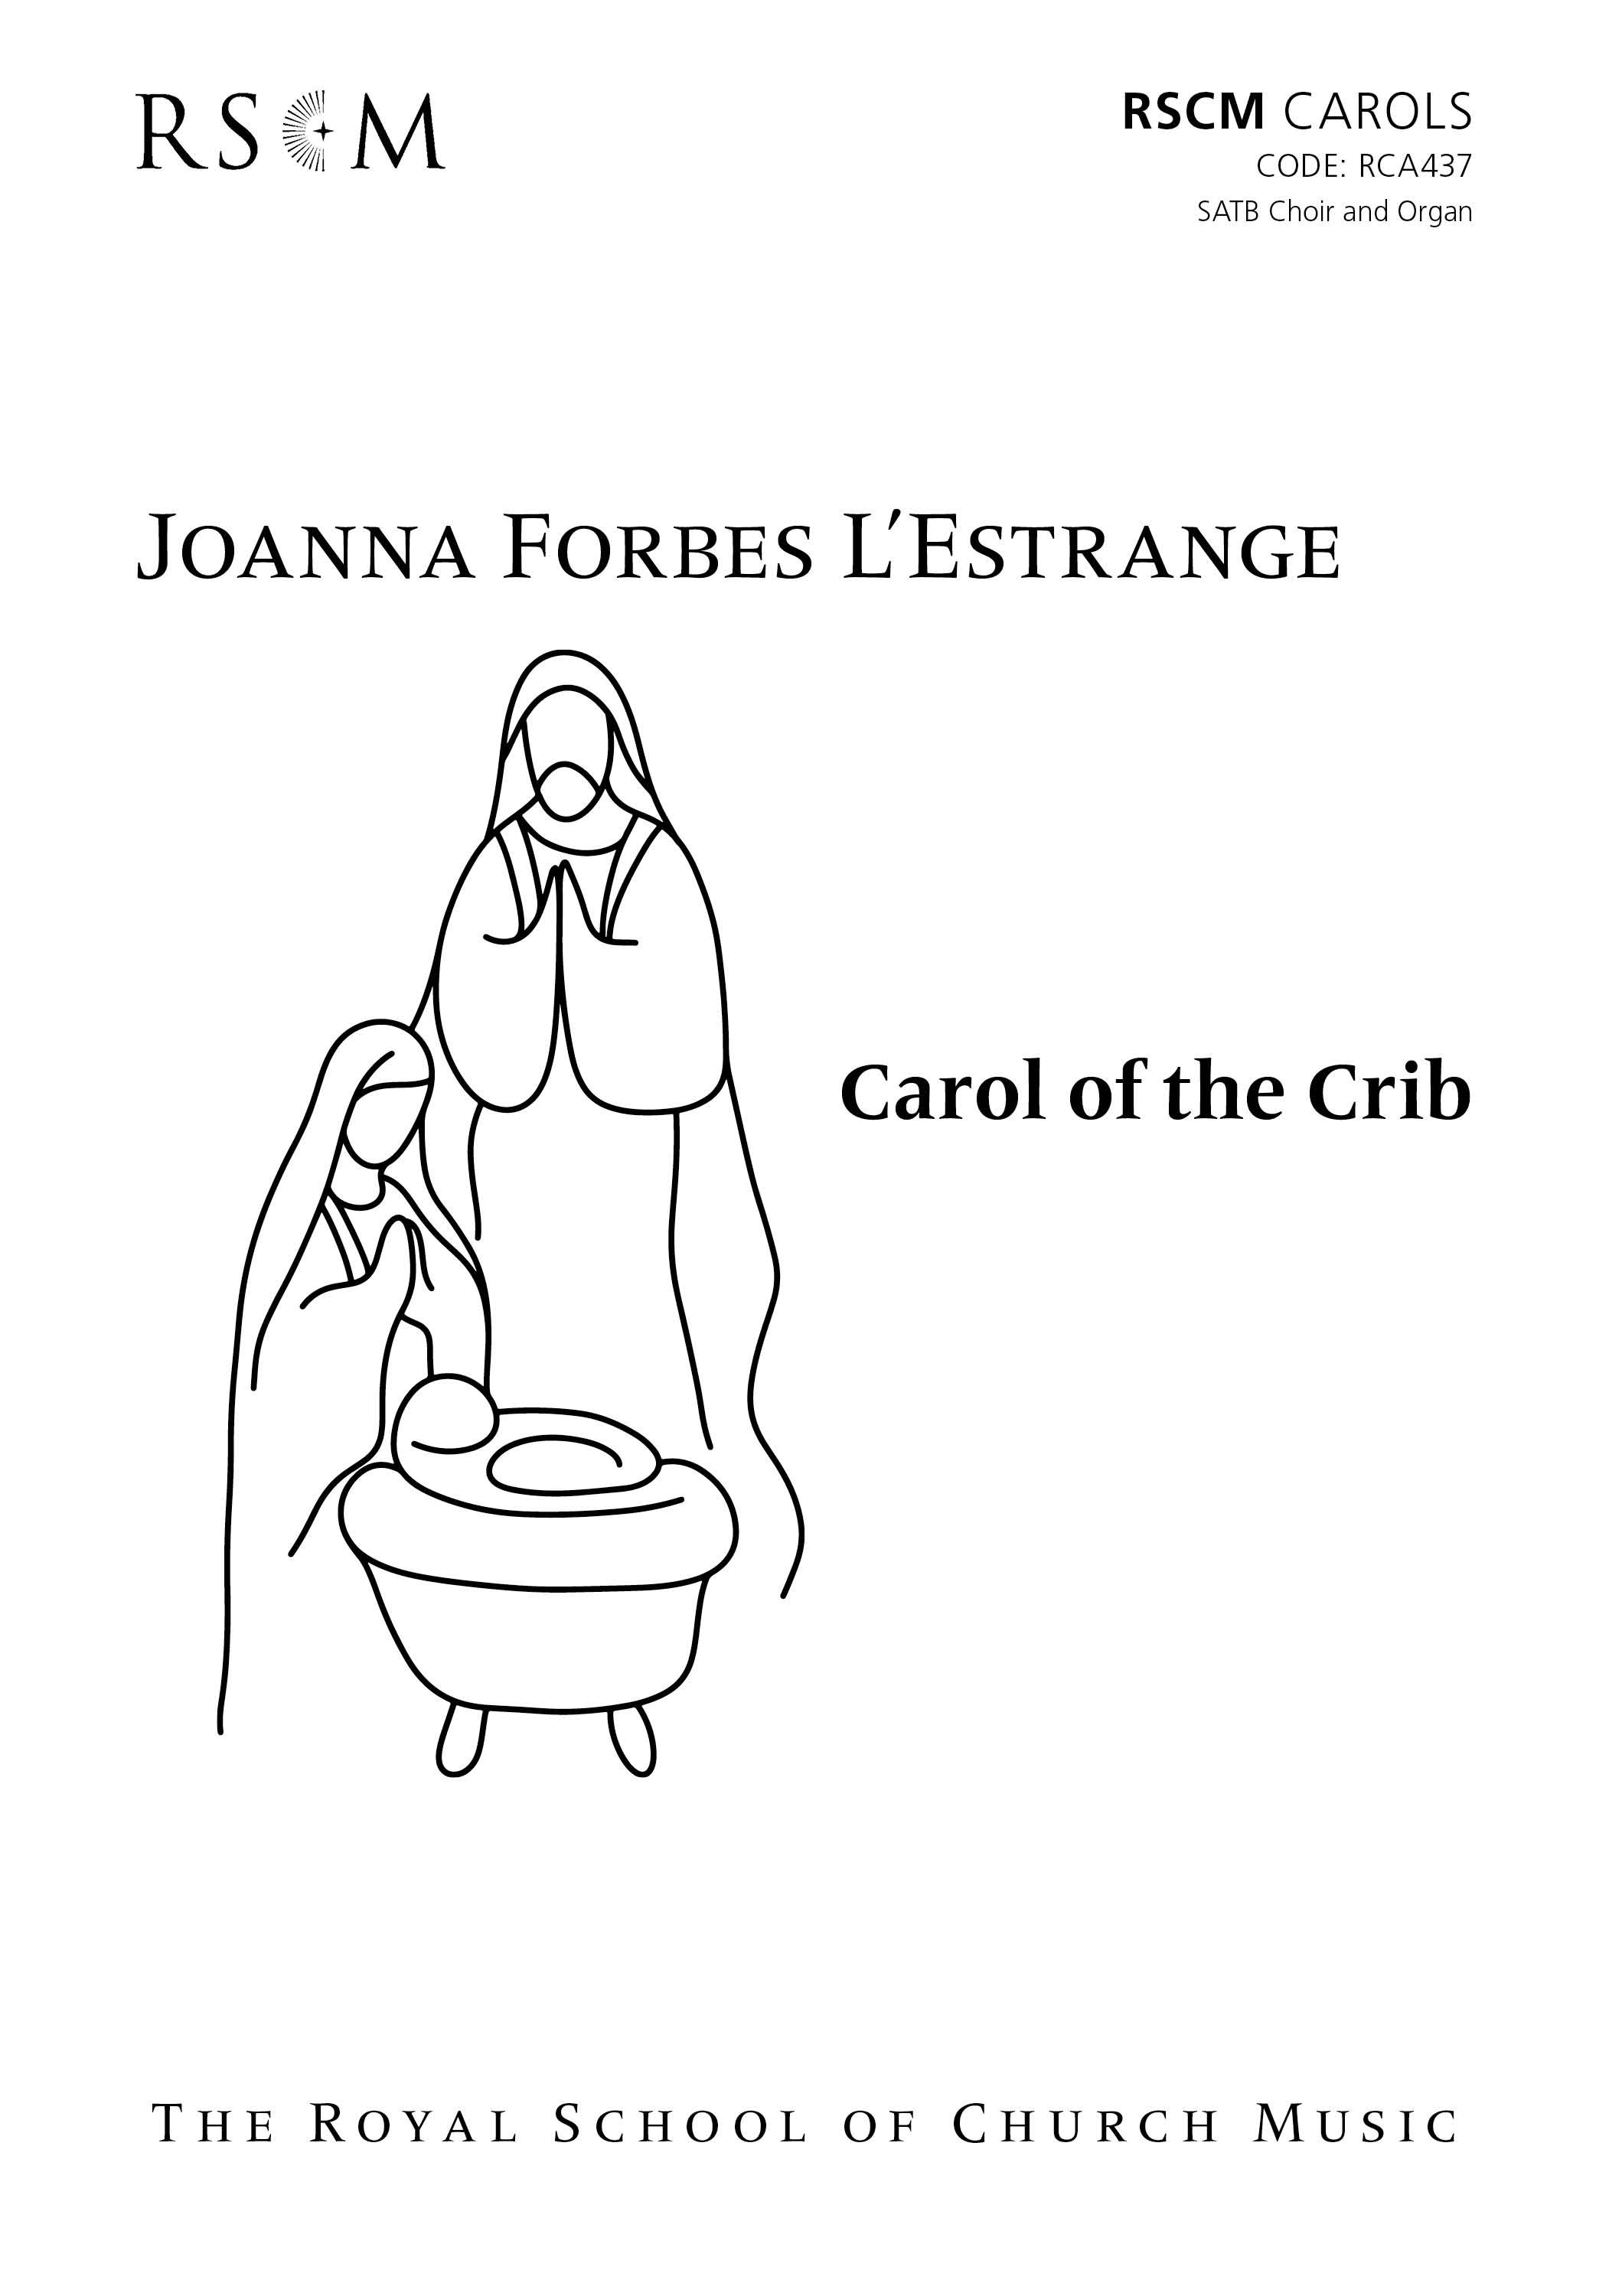 Carol of the Crib COVER.jpg